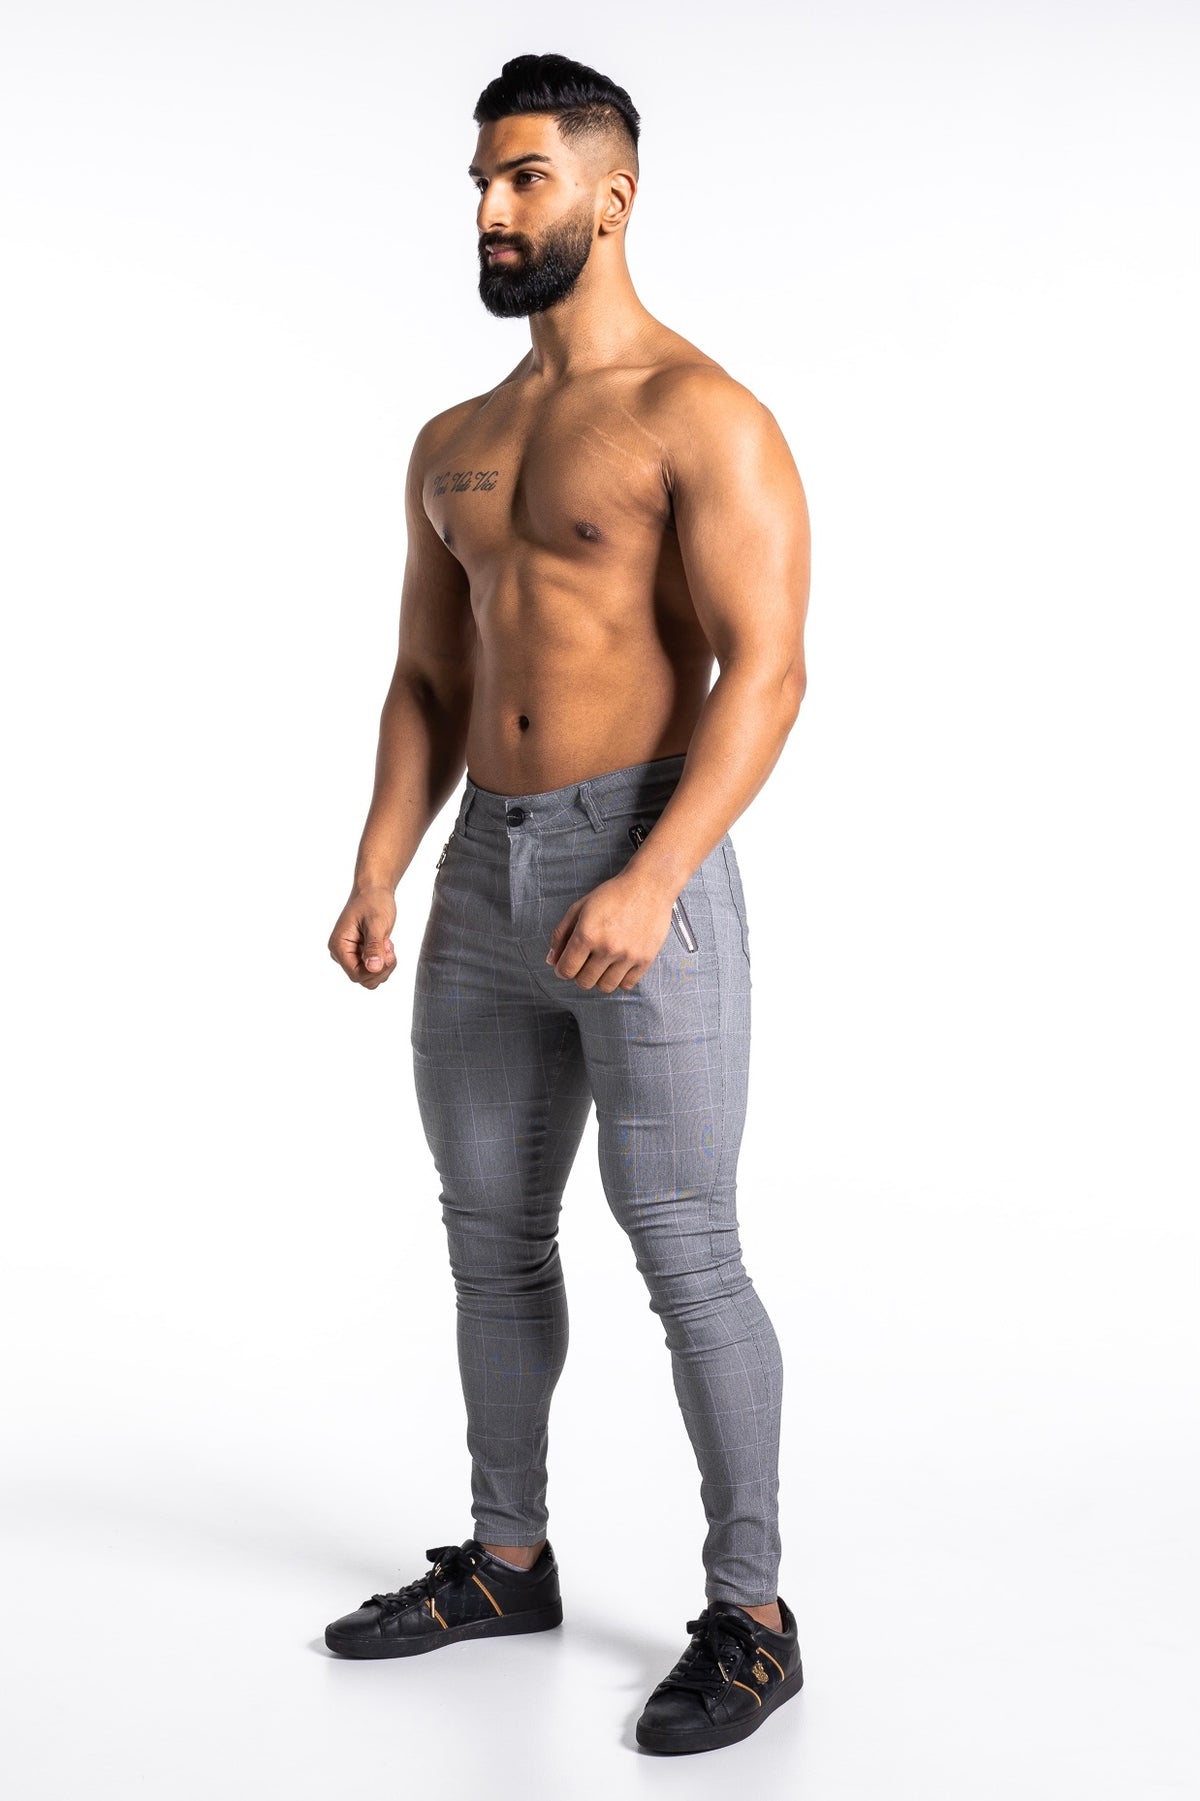 KCC Men's Premium Check Pants - Grey